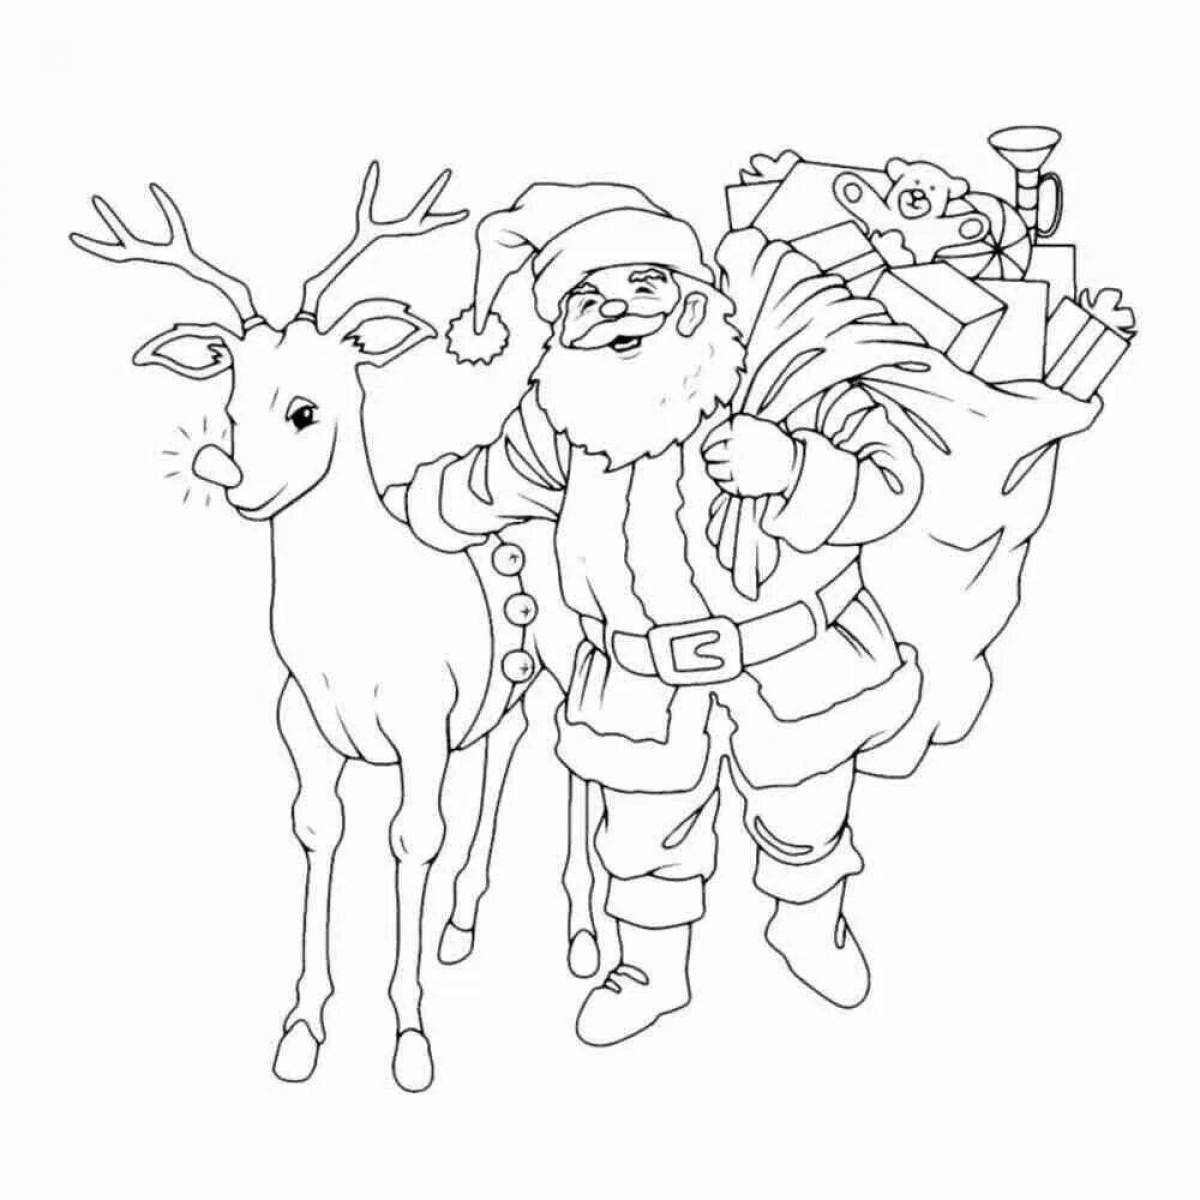 Coloring book shining santa claus and reindeer